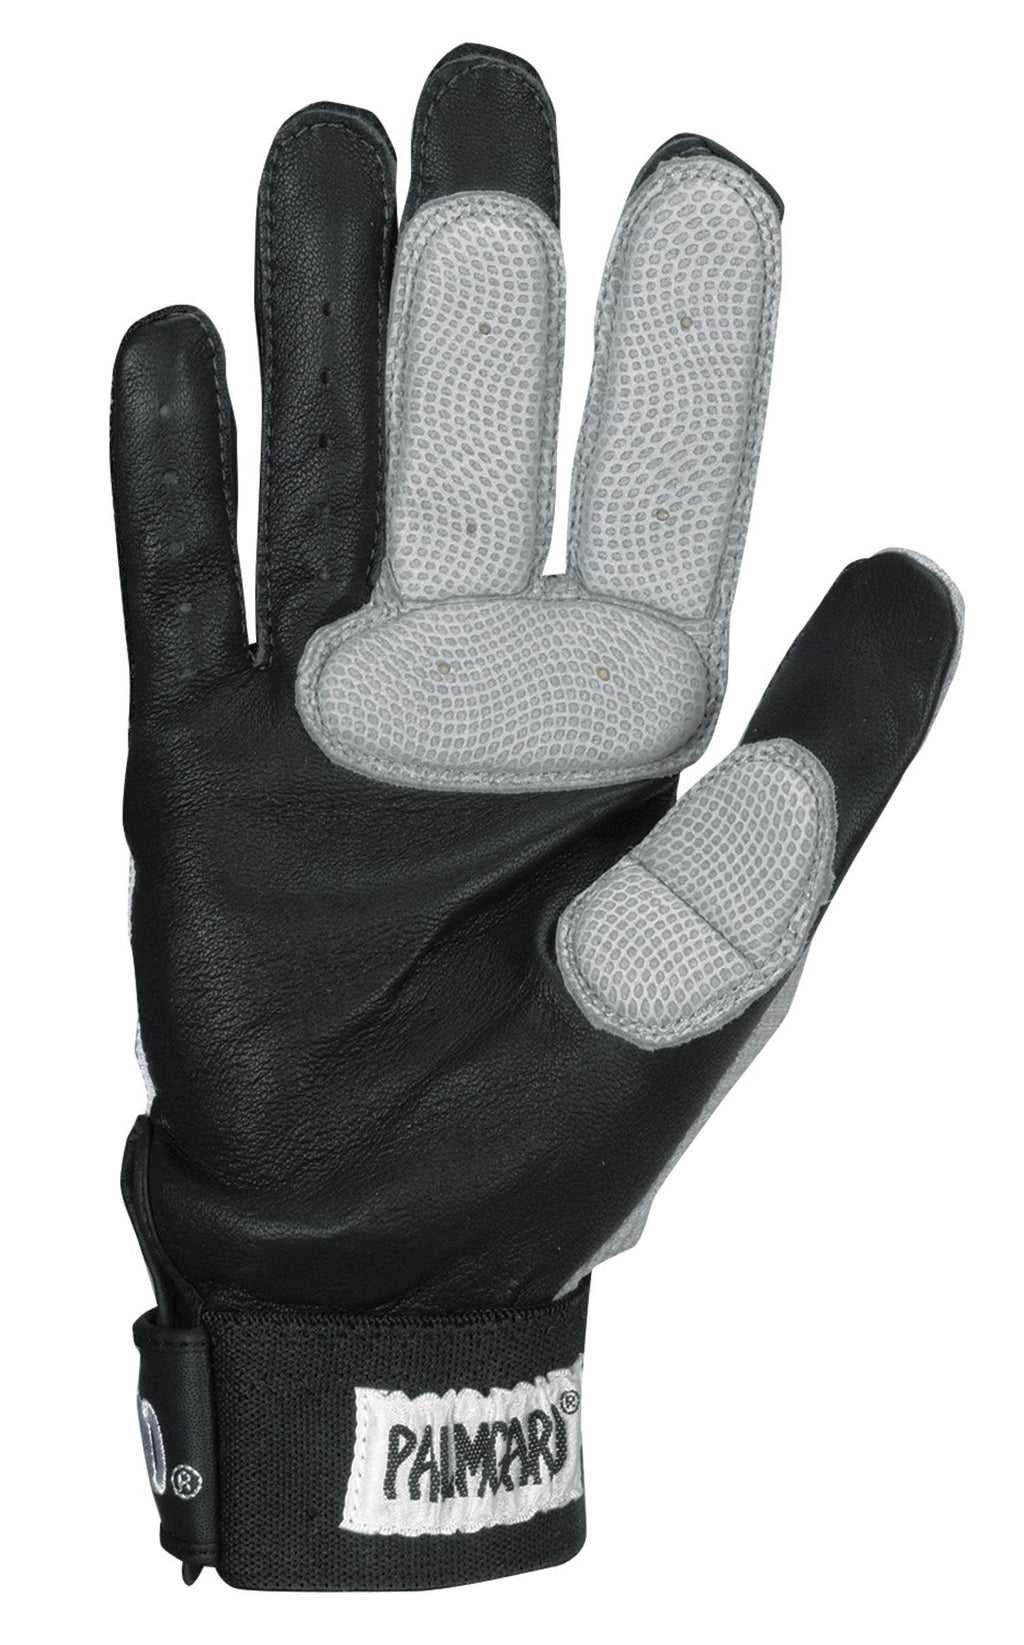 [AUSTRALIA] - Markwort Palmgard Xtra Inner Glove, Youth Large Left Hand Throw 